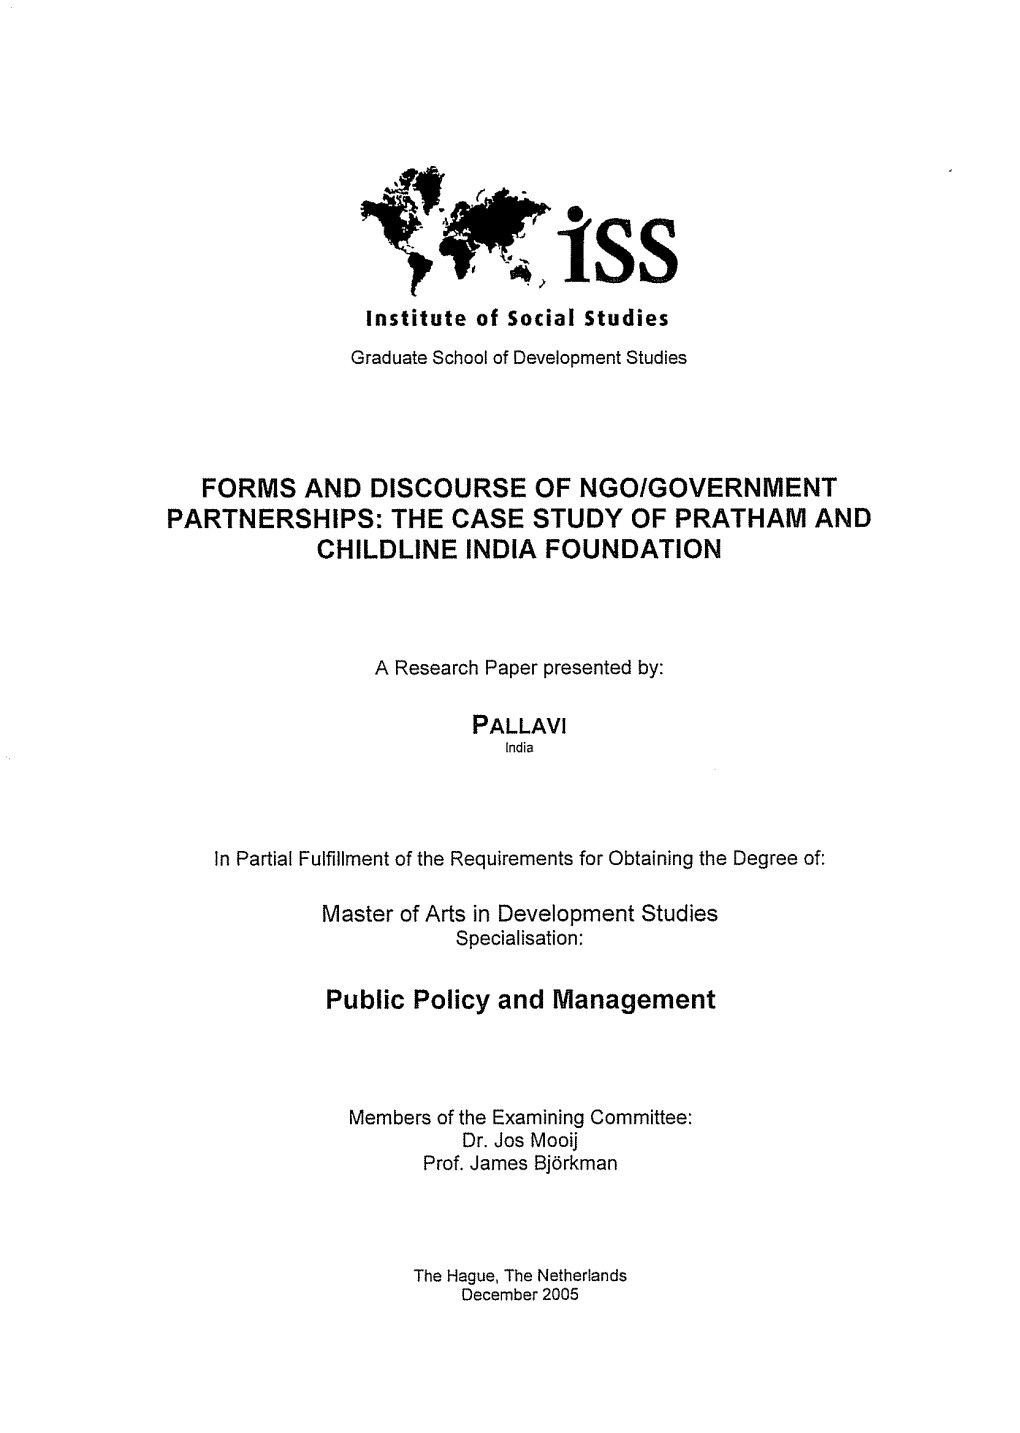 The Case Study of Pratham and Childline India Foundation